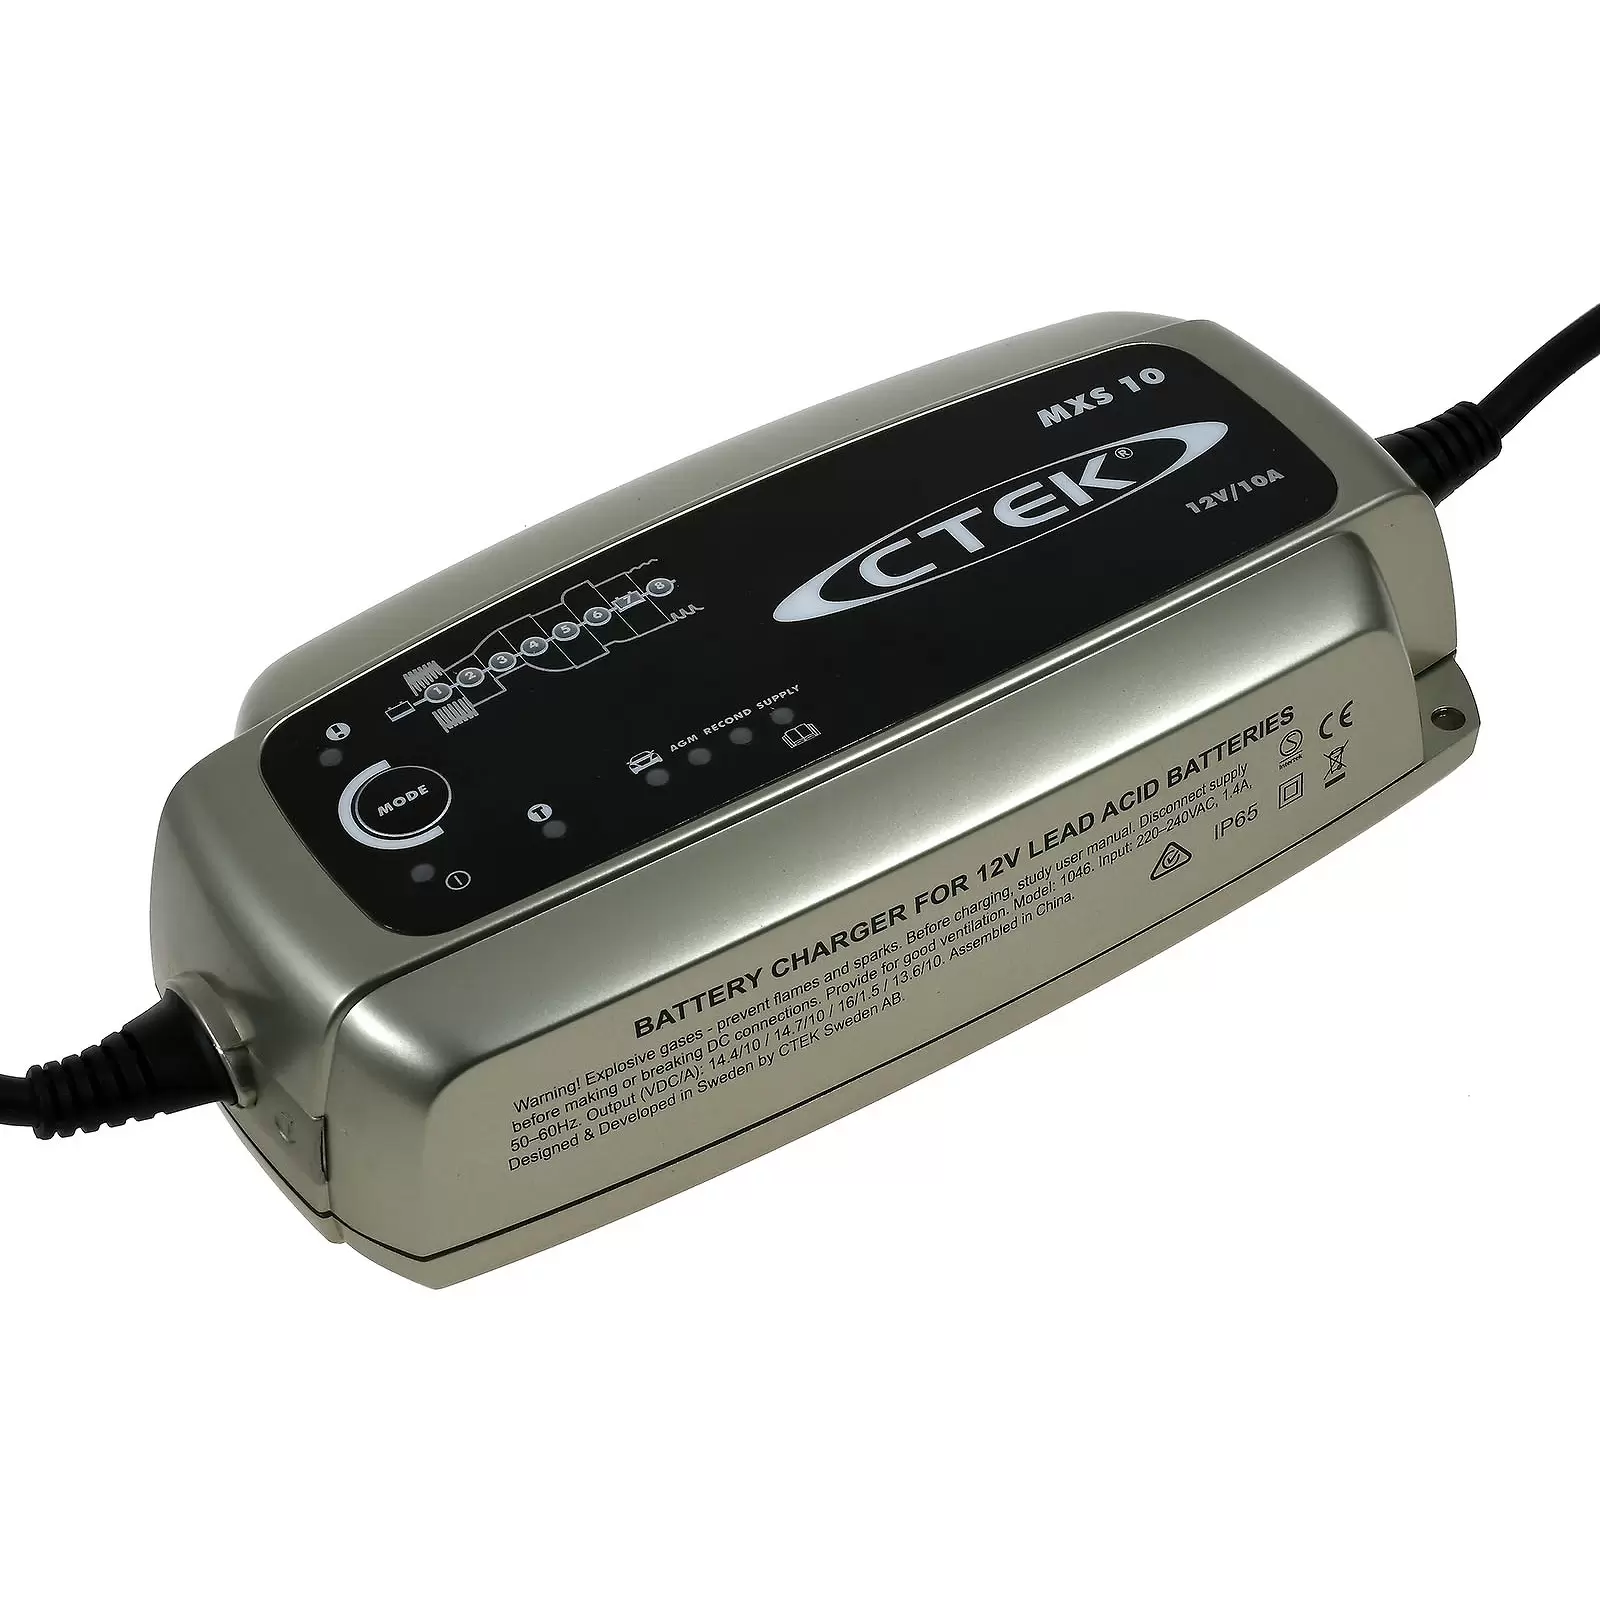 CTEK MXS 10 Batterie-Ladegerät, vollautomatisch u.a. für Auto